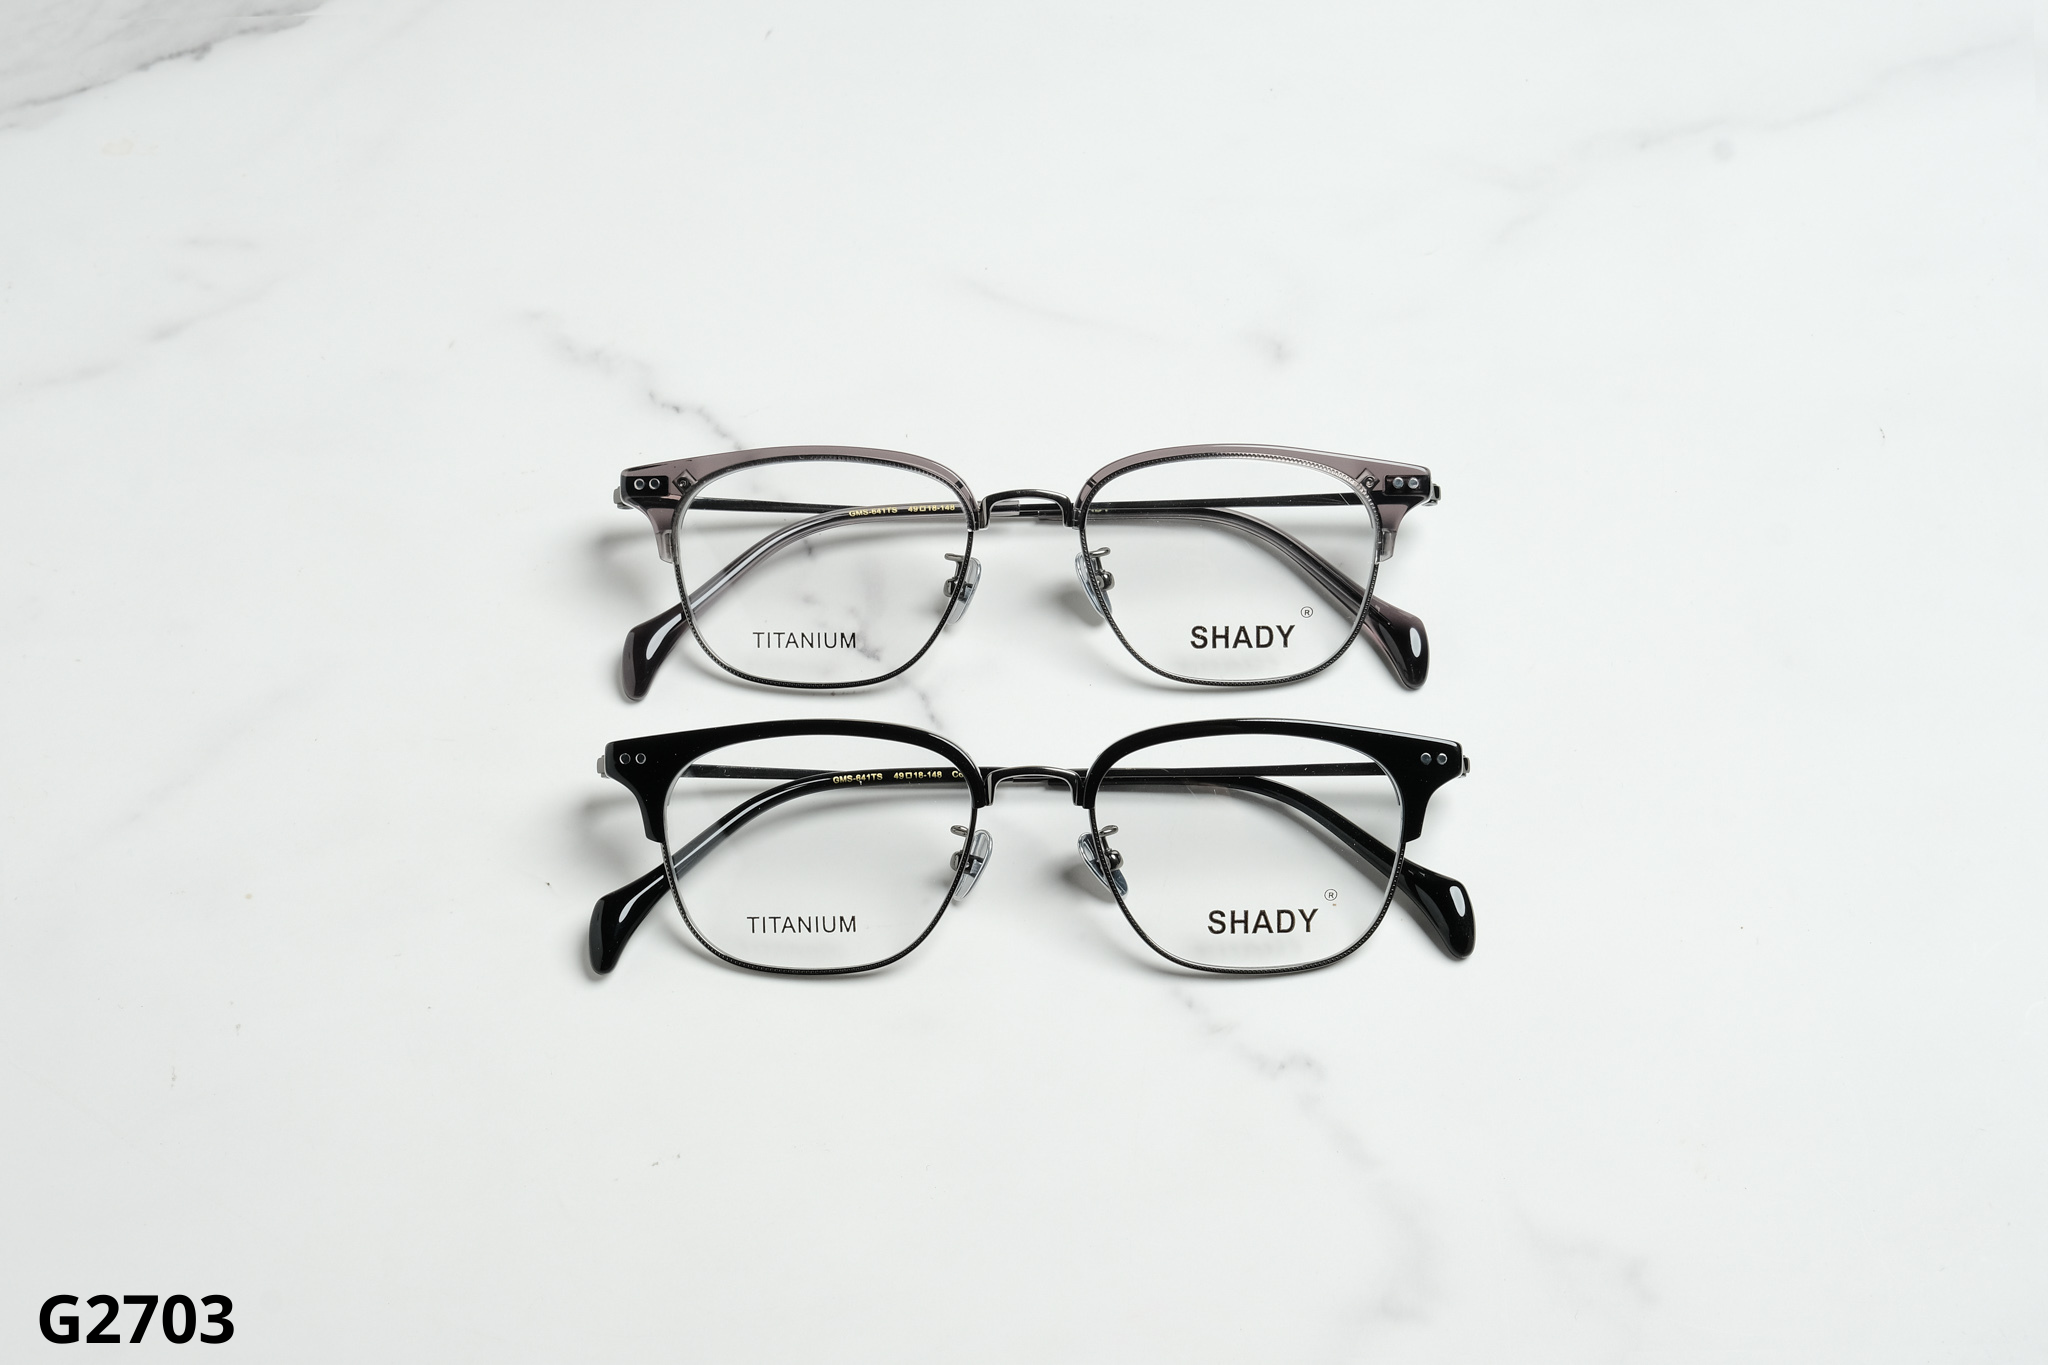  SHADY Eyewear - Glasses - G2703 